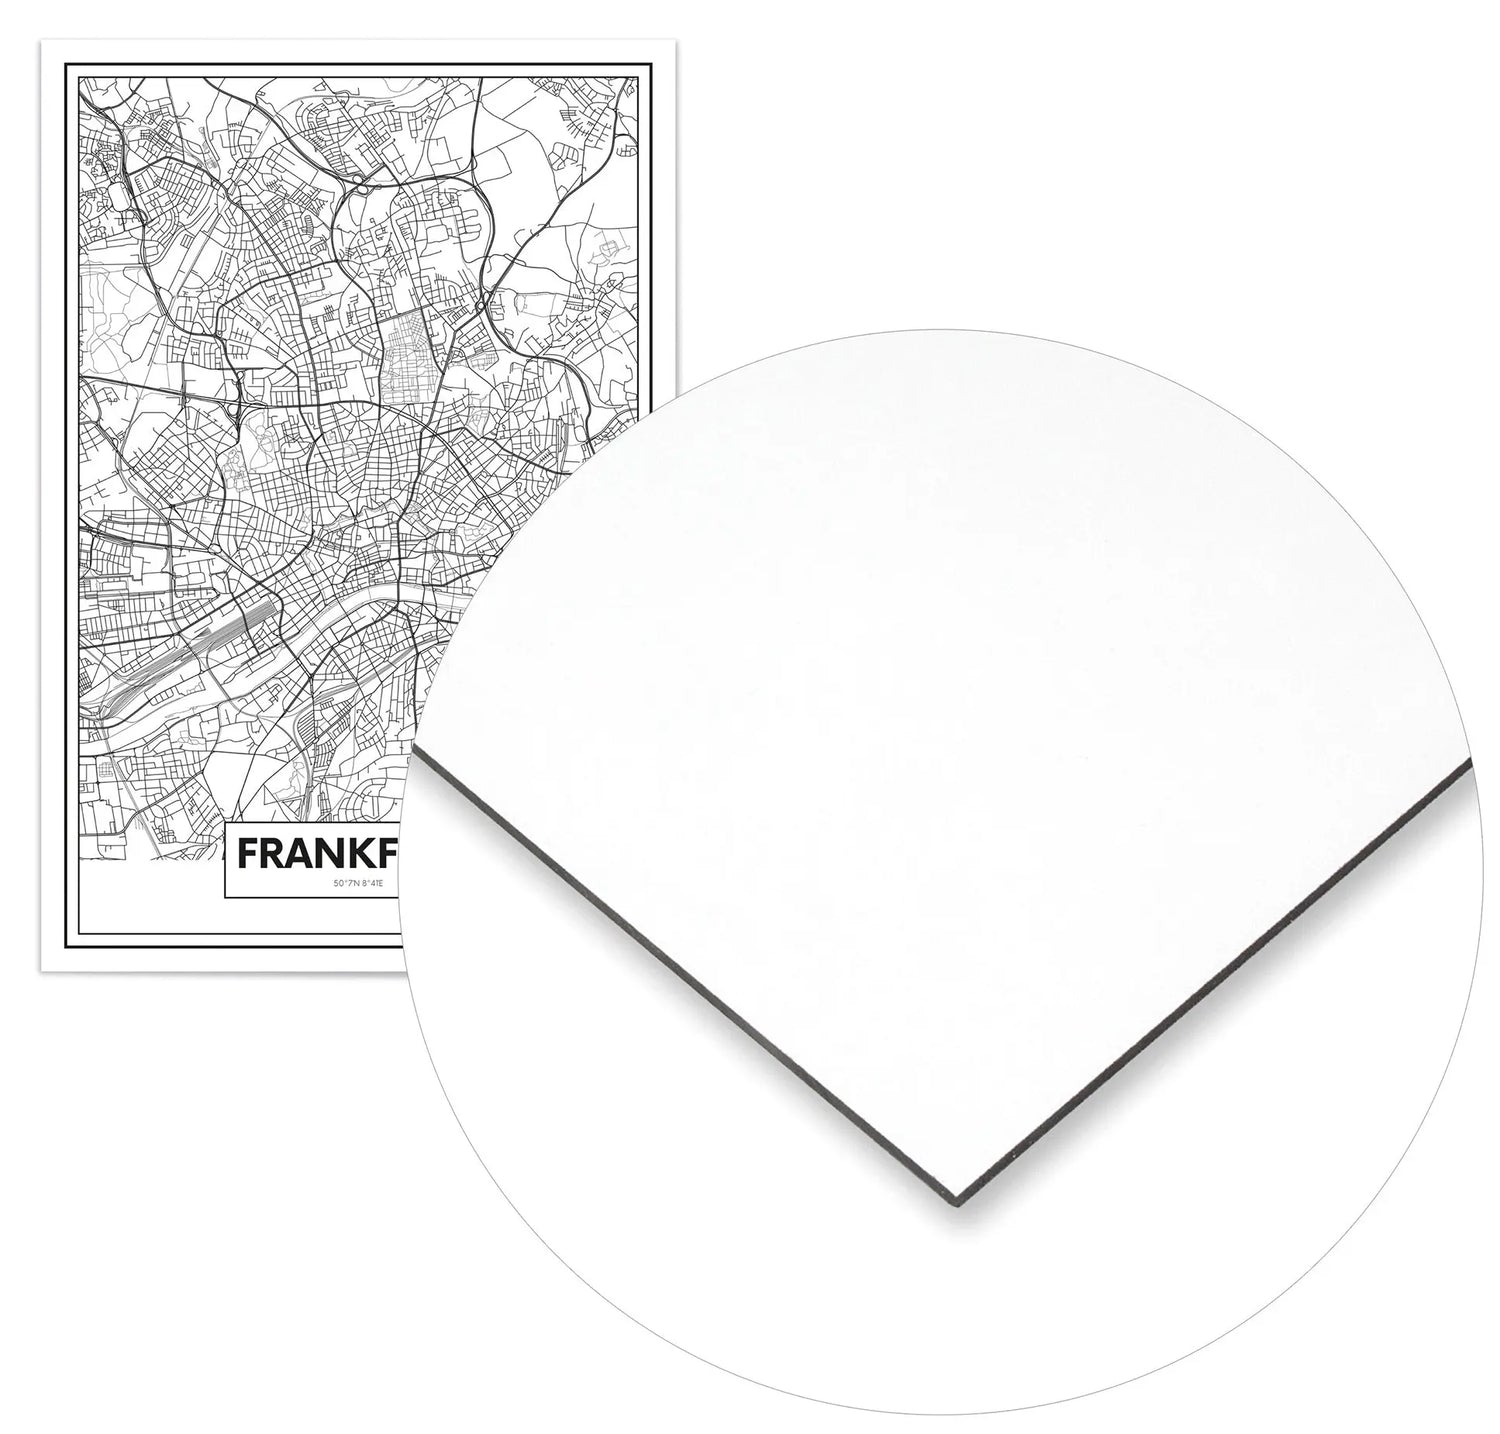 Cuadro Mapa Frankfurt freeshipping - Home and Living